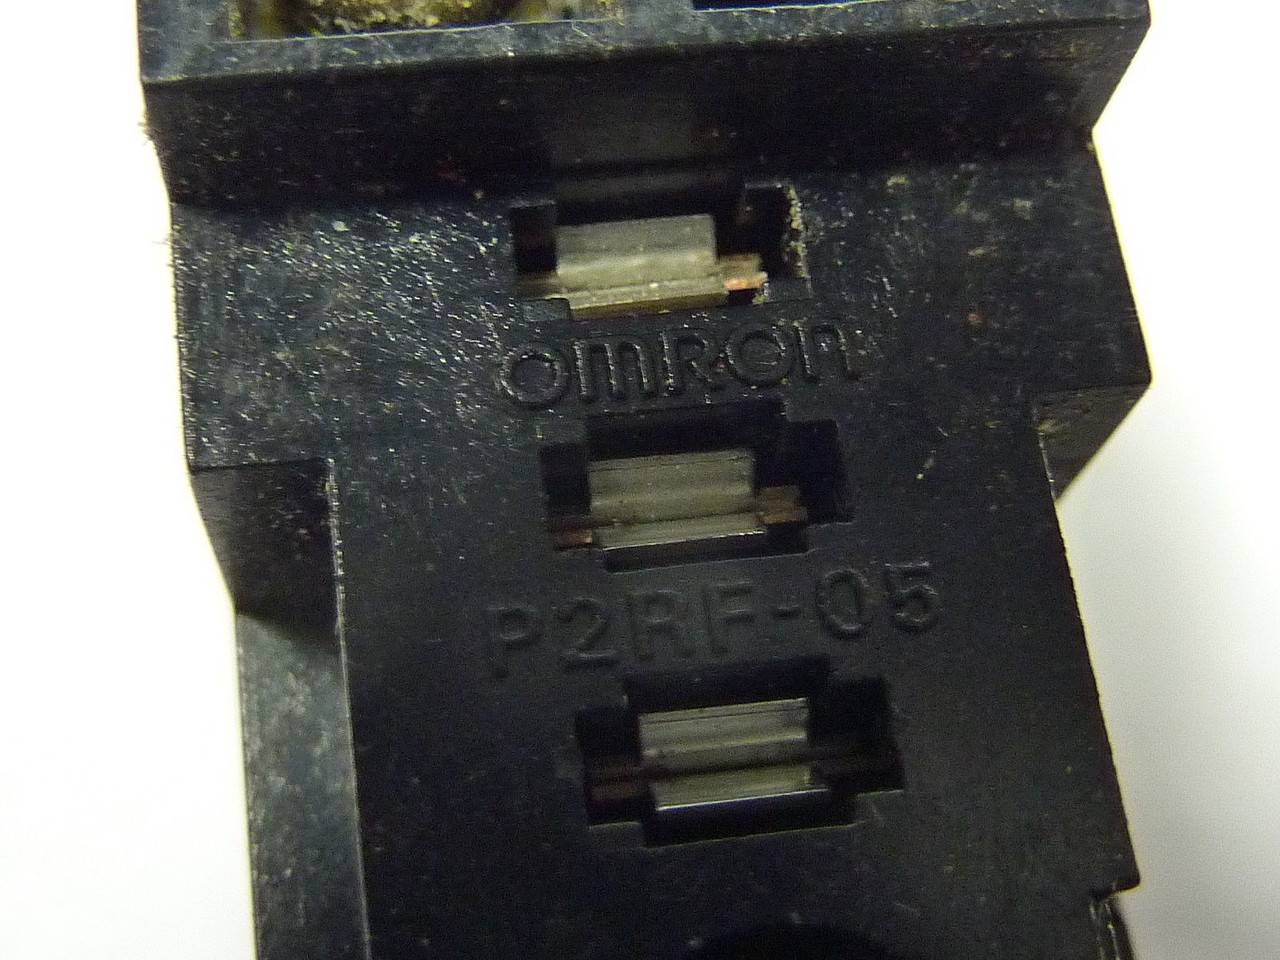 Omron P2RF-05 Relay Socket 10A 250V 5 pin *Broken Relay Clip* USED